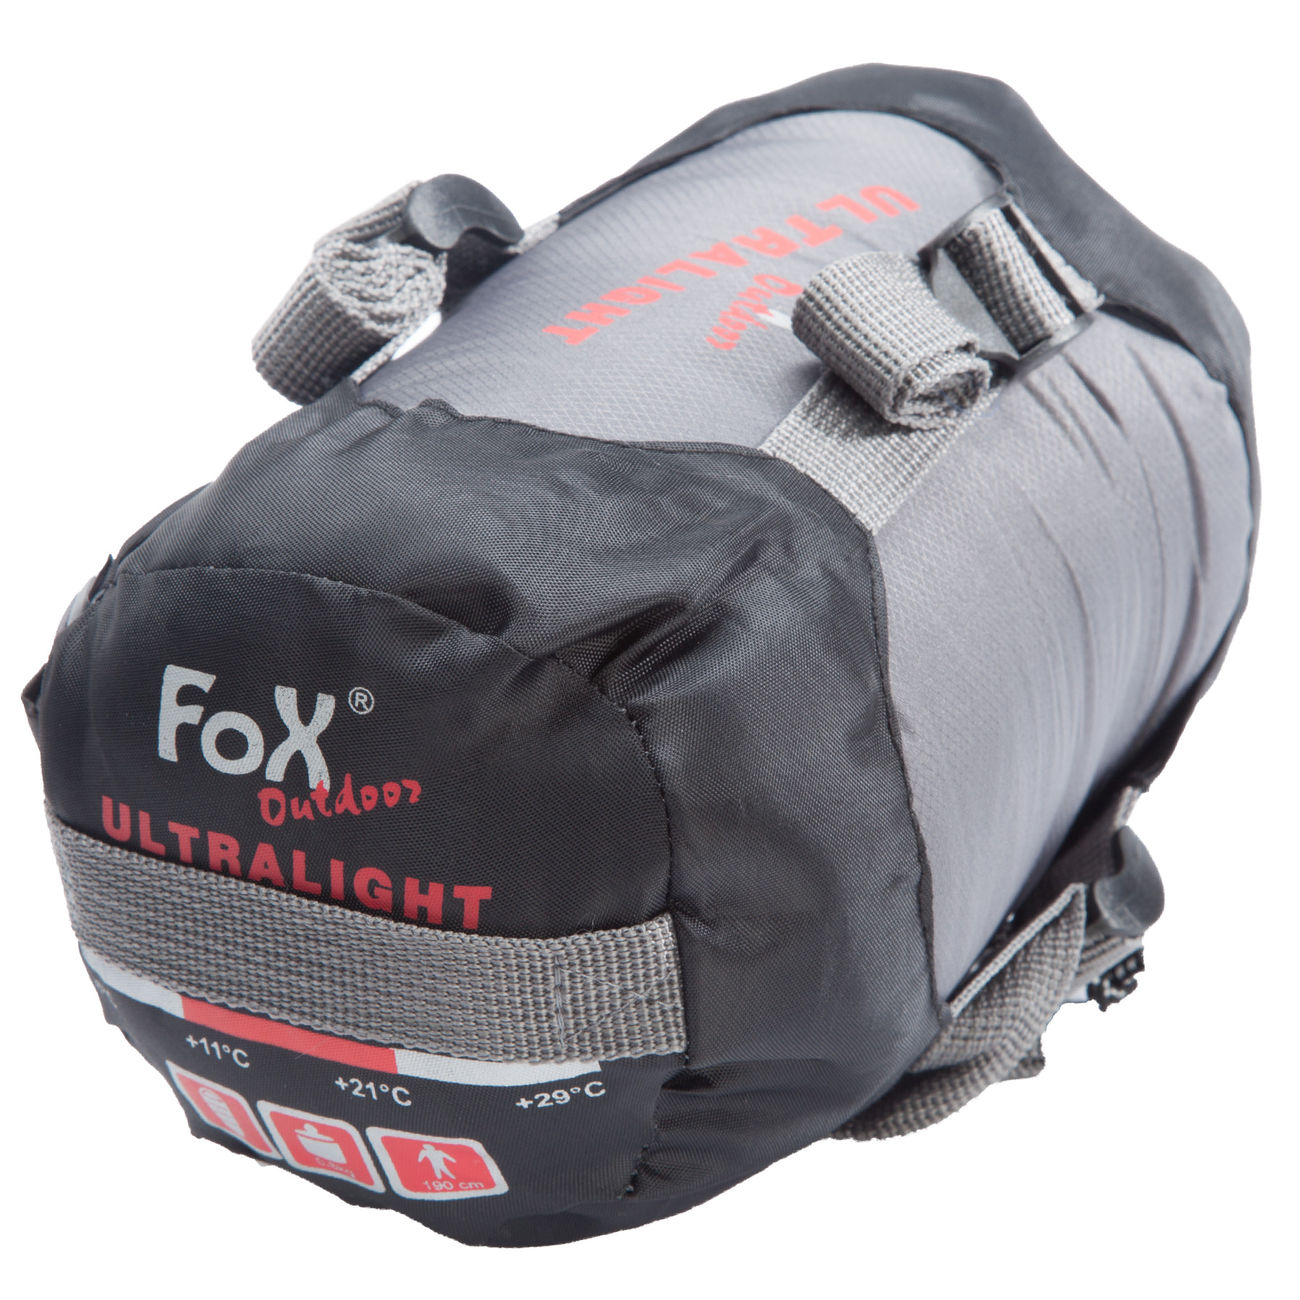 Fox Outdoor Schlafsack Ultralight schwarz/grau 